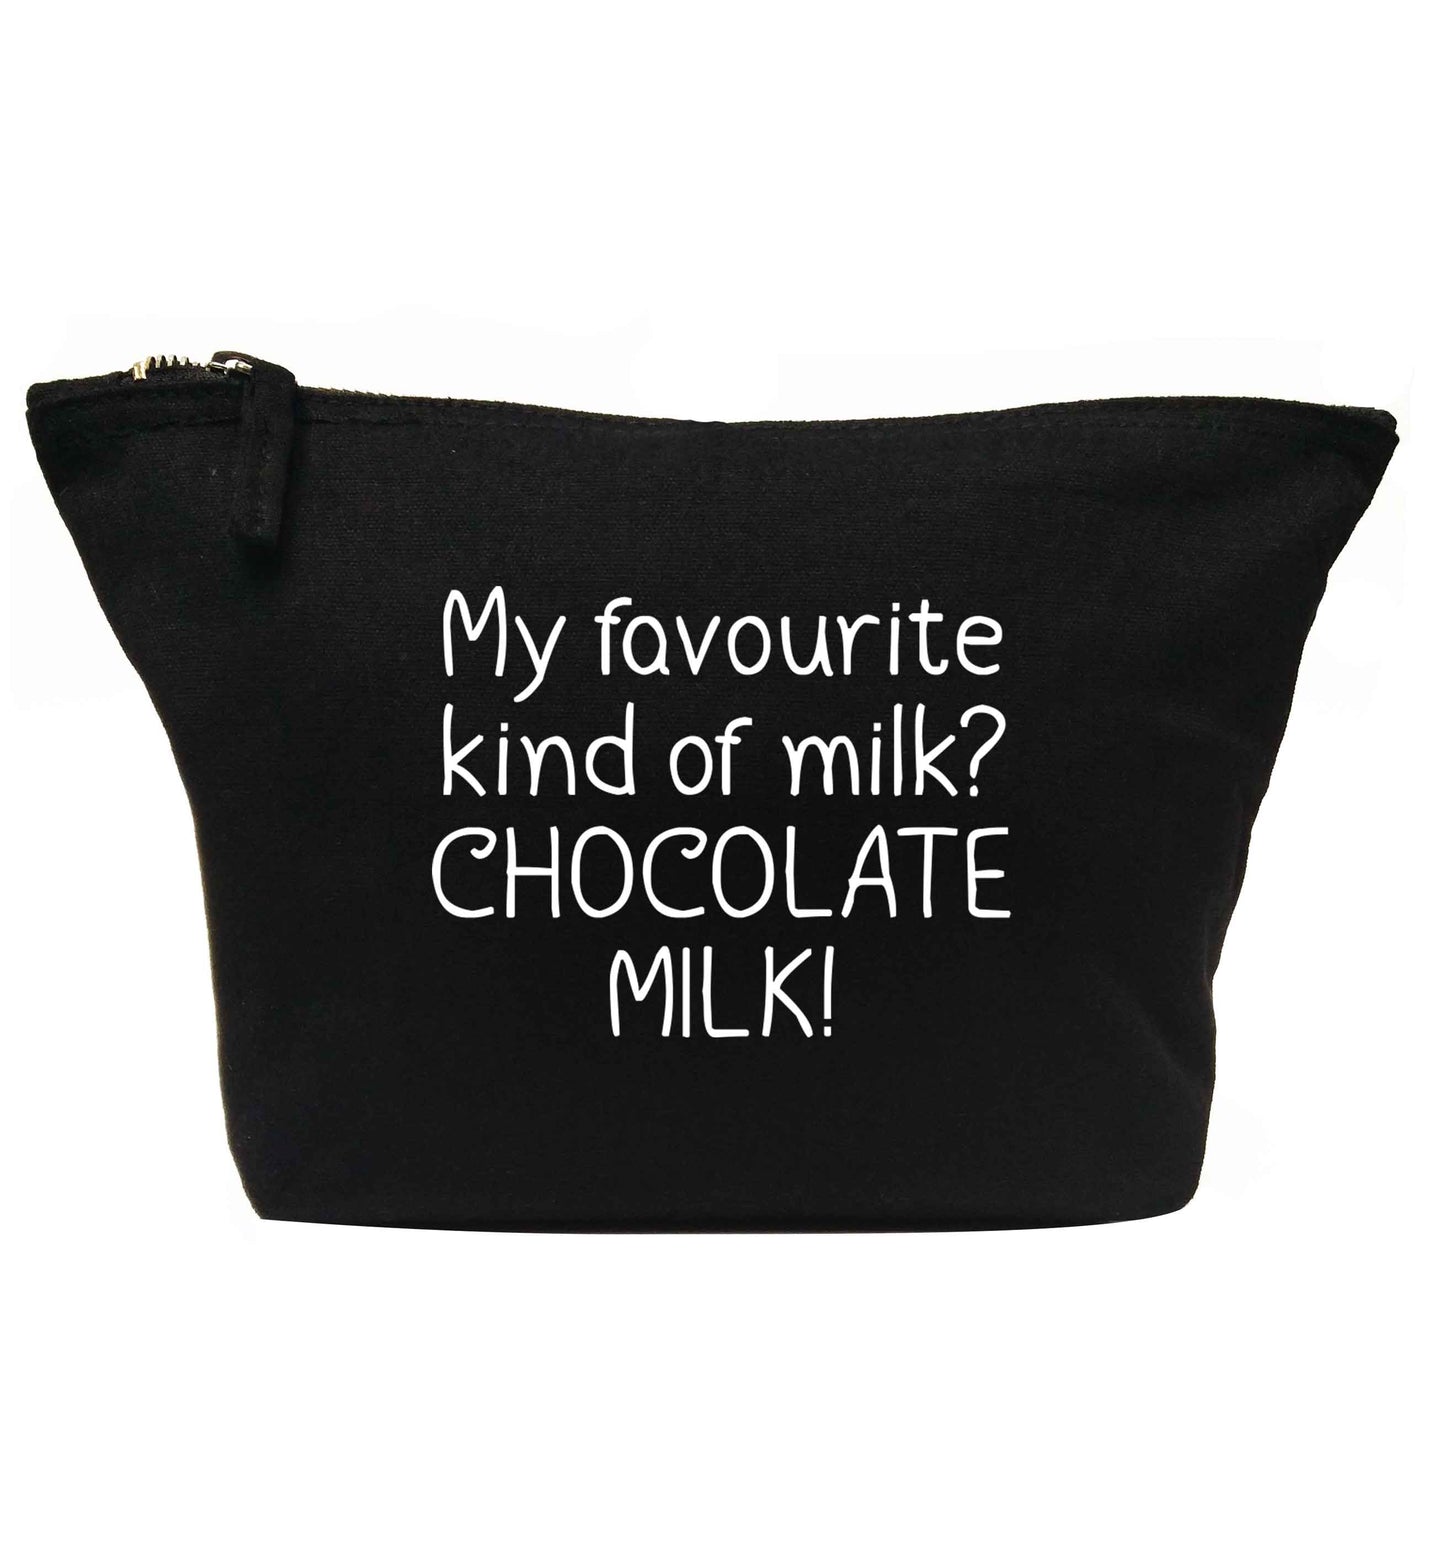 My favourite kind of milk? Chocolate milk! | Makeup / wash bag